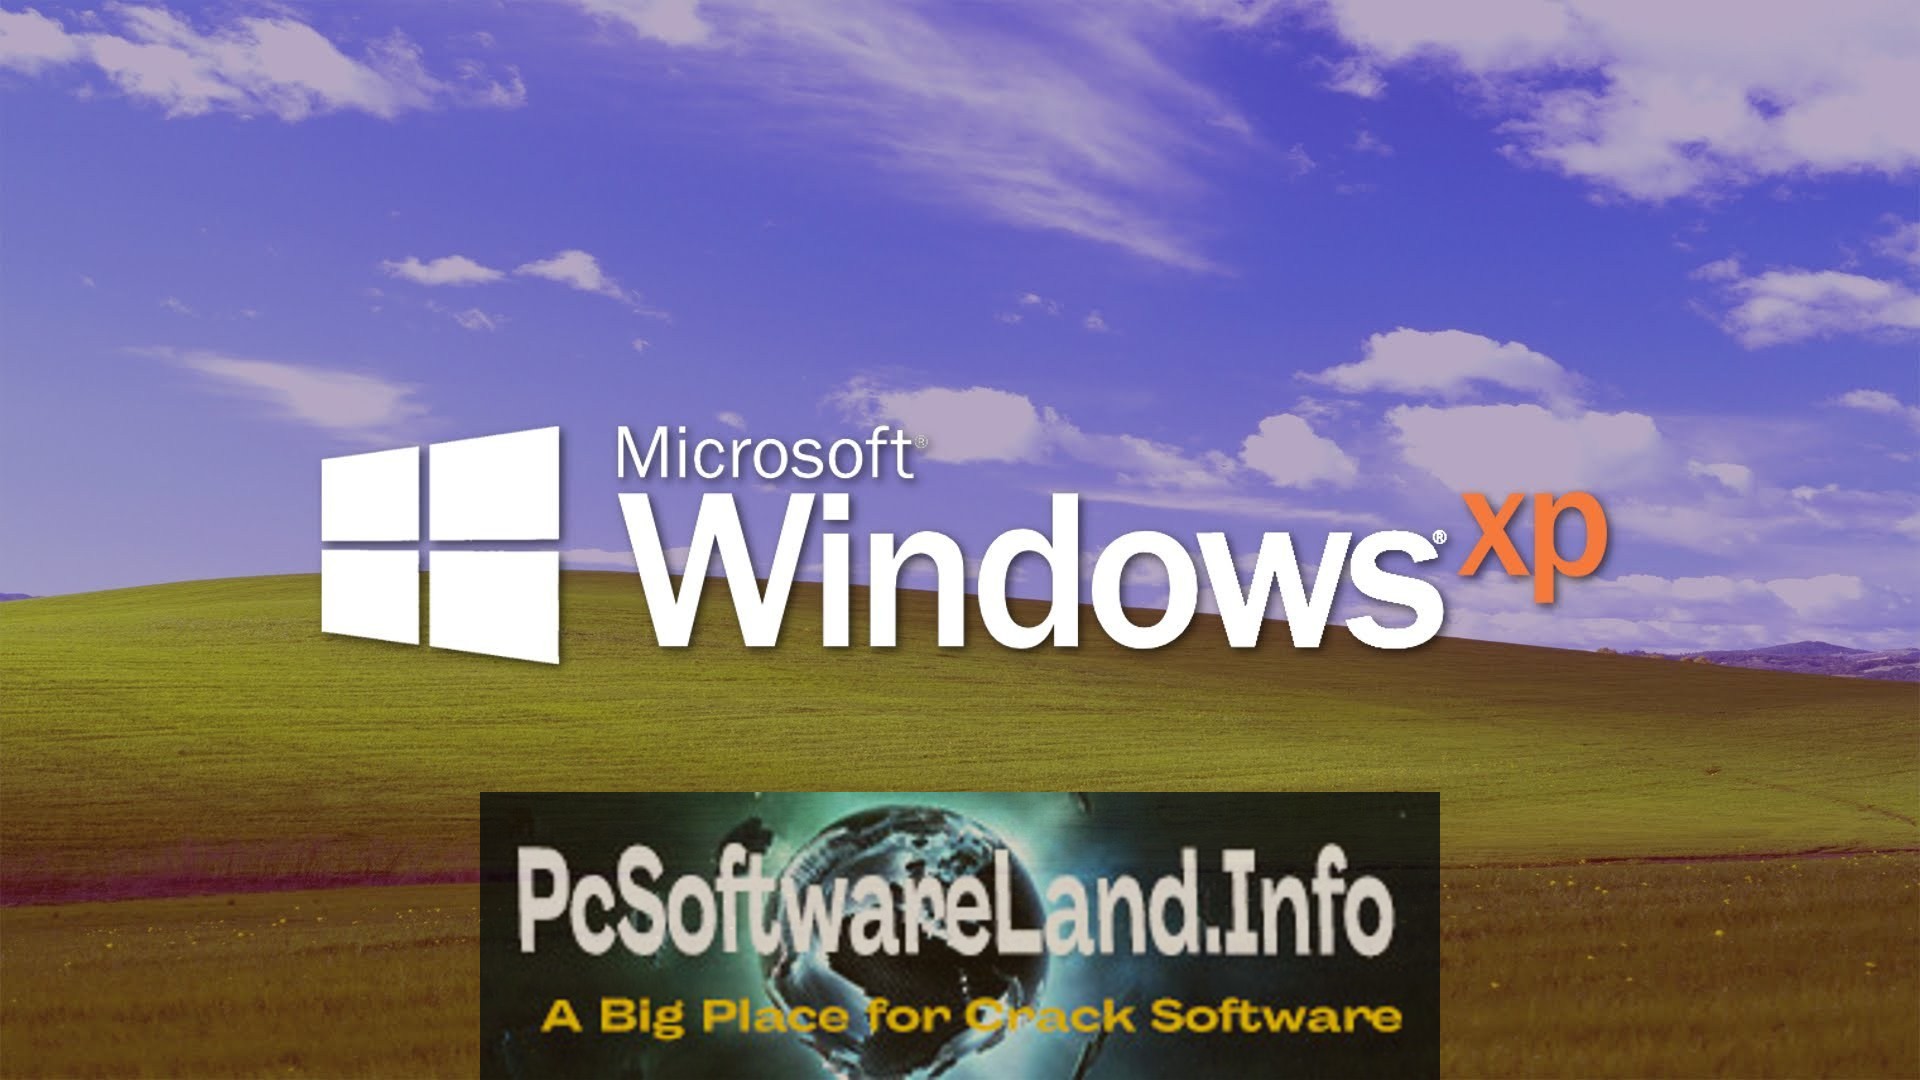 Windows Xp Pro Sp3 Iso Download German